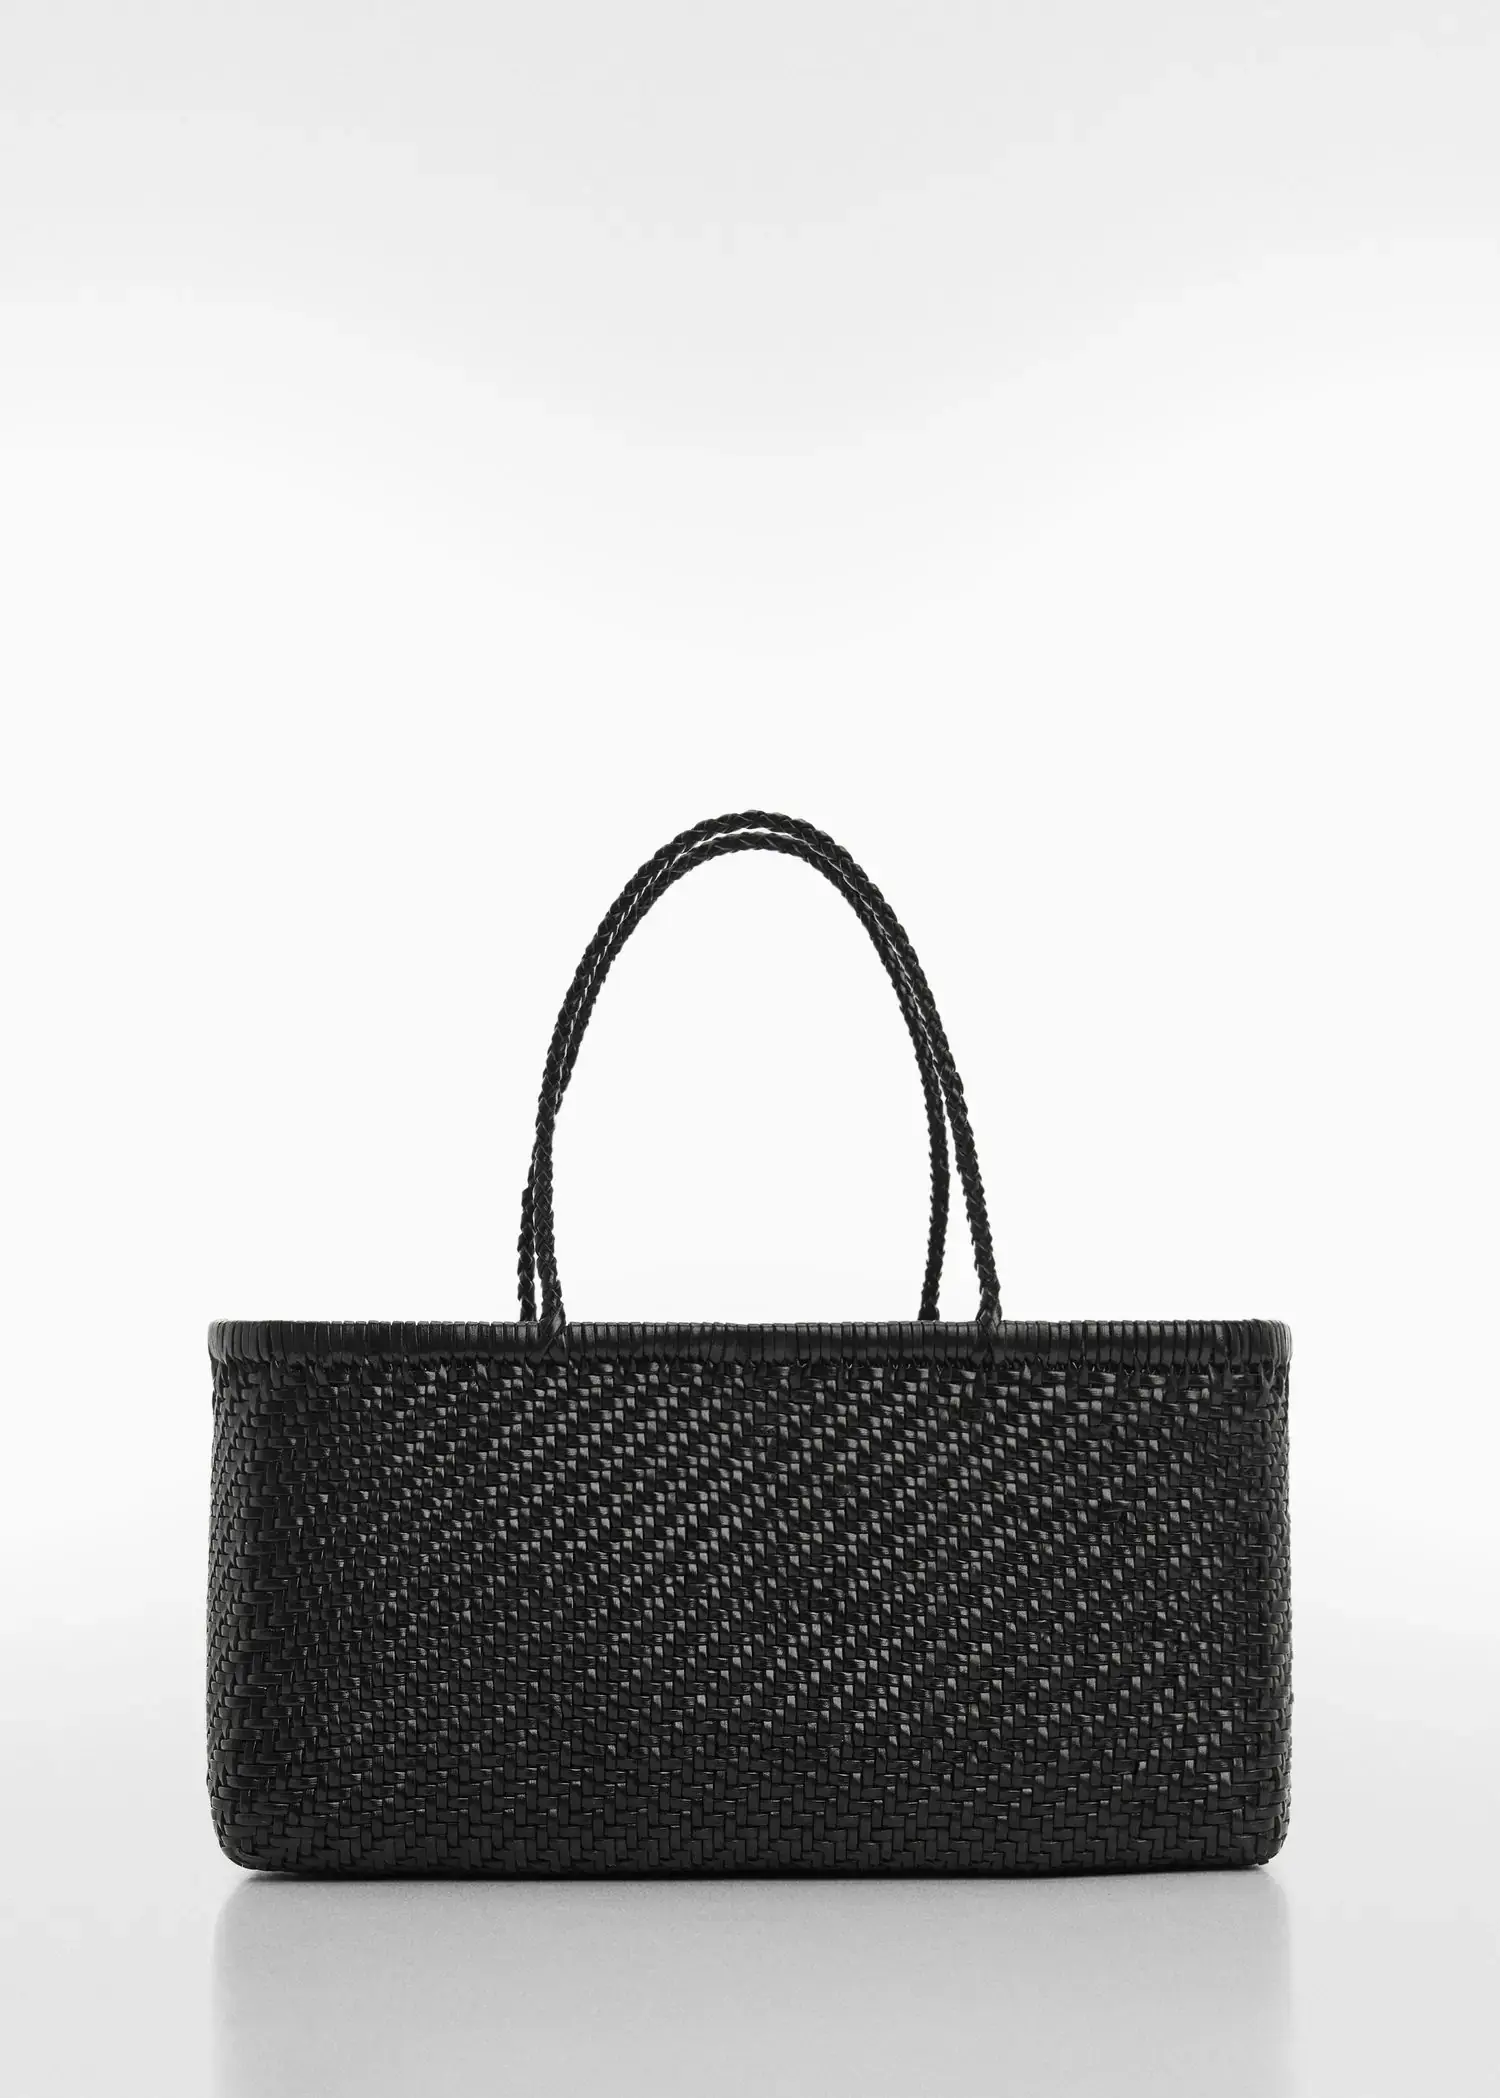 Mango Braided leather bag. 3